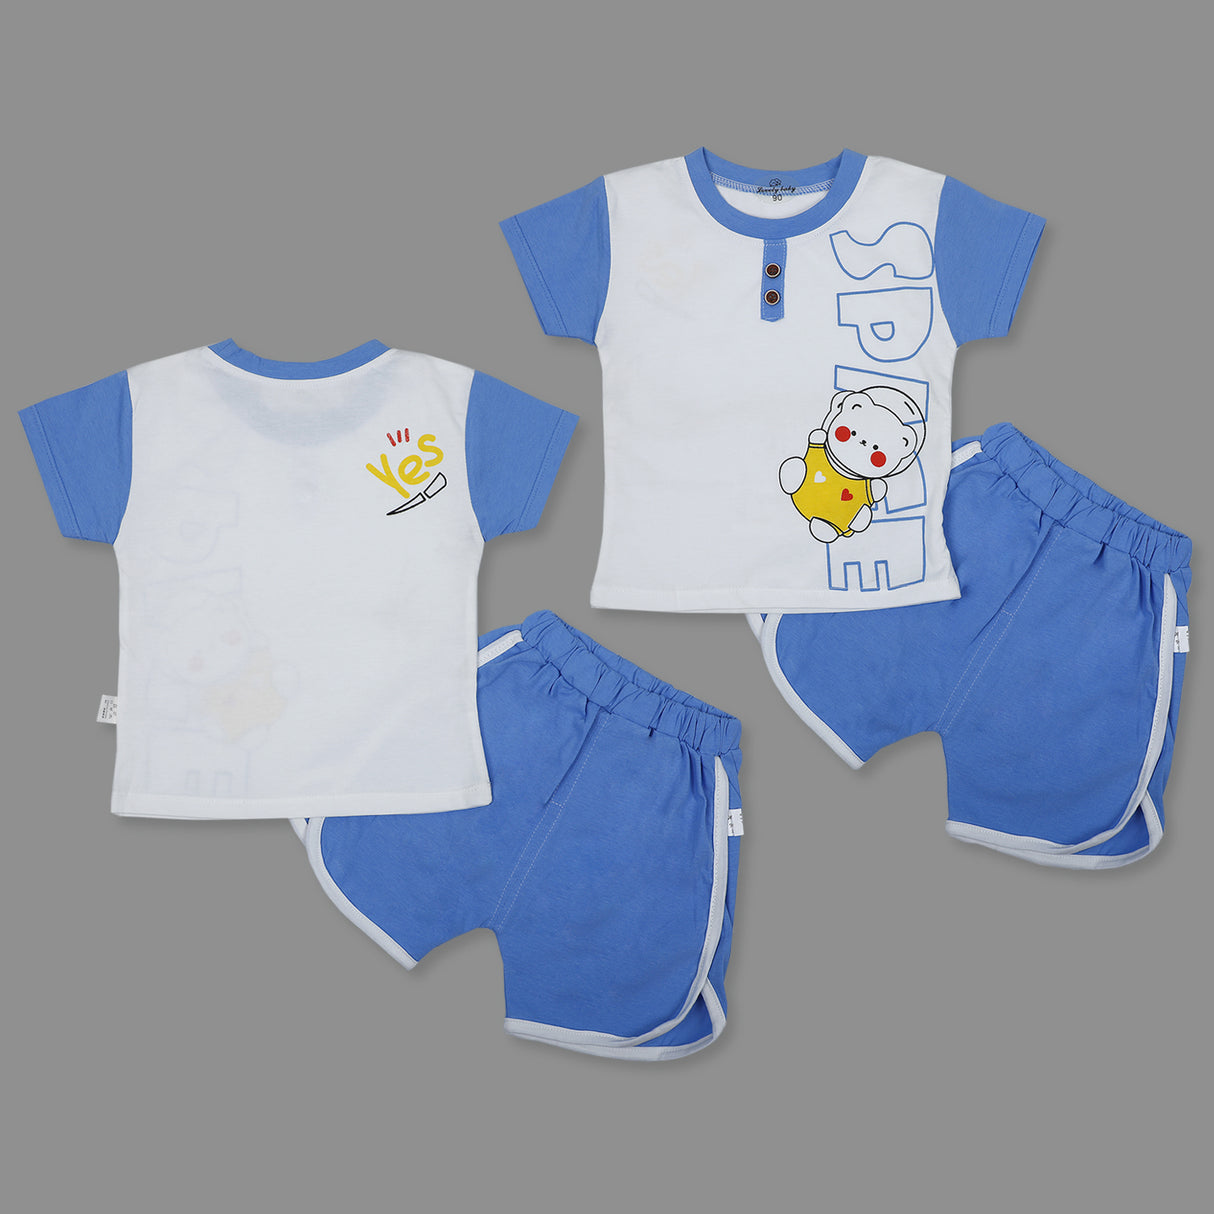 Astronaut Infant Half Sleeve Top And Bottom Baba Suit